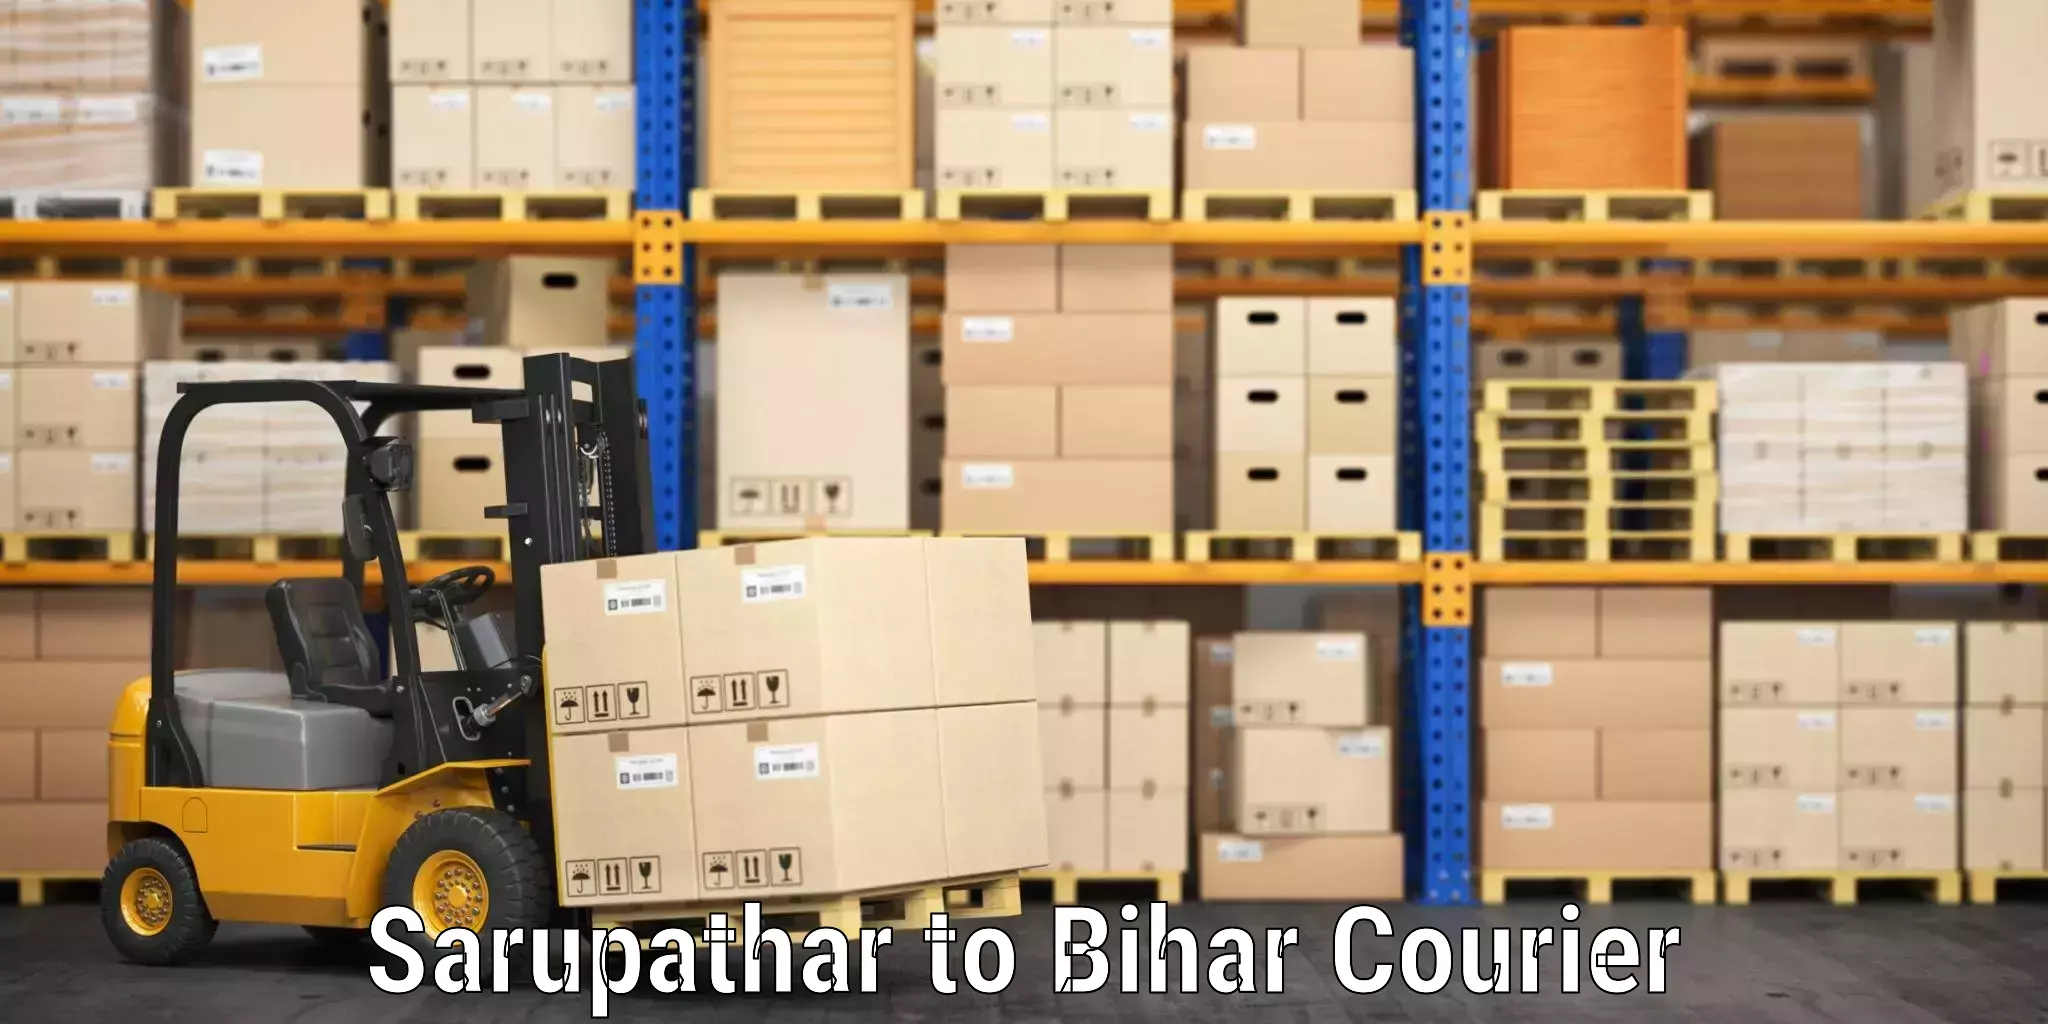 Baggage relocation service Sarupathar to Bihar